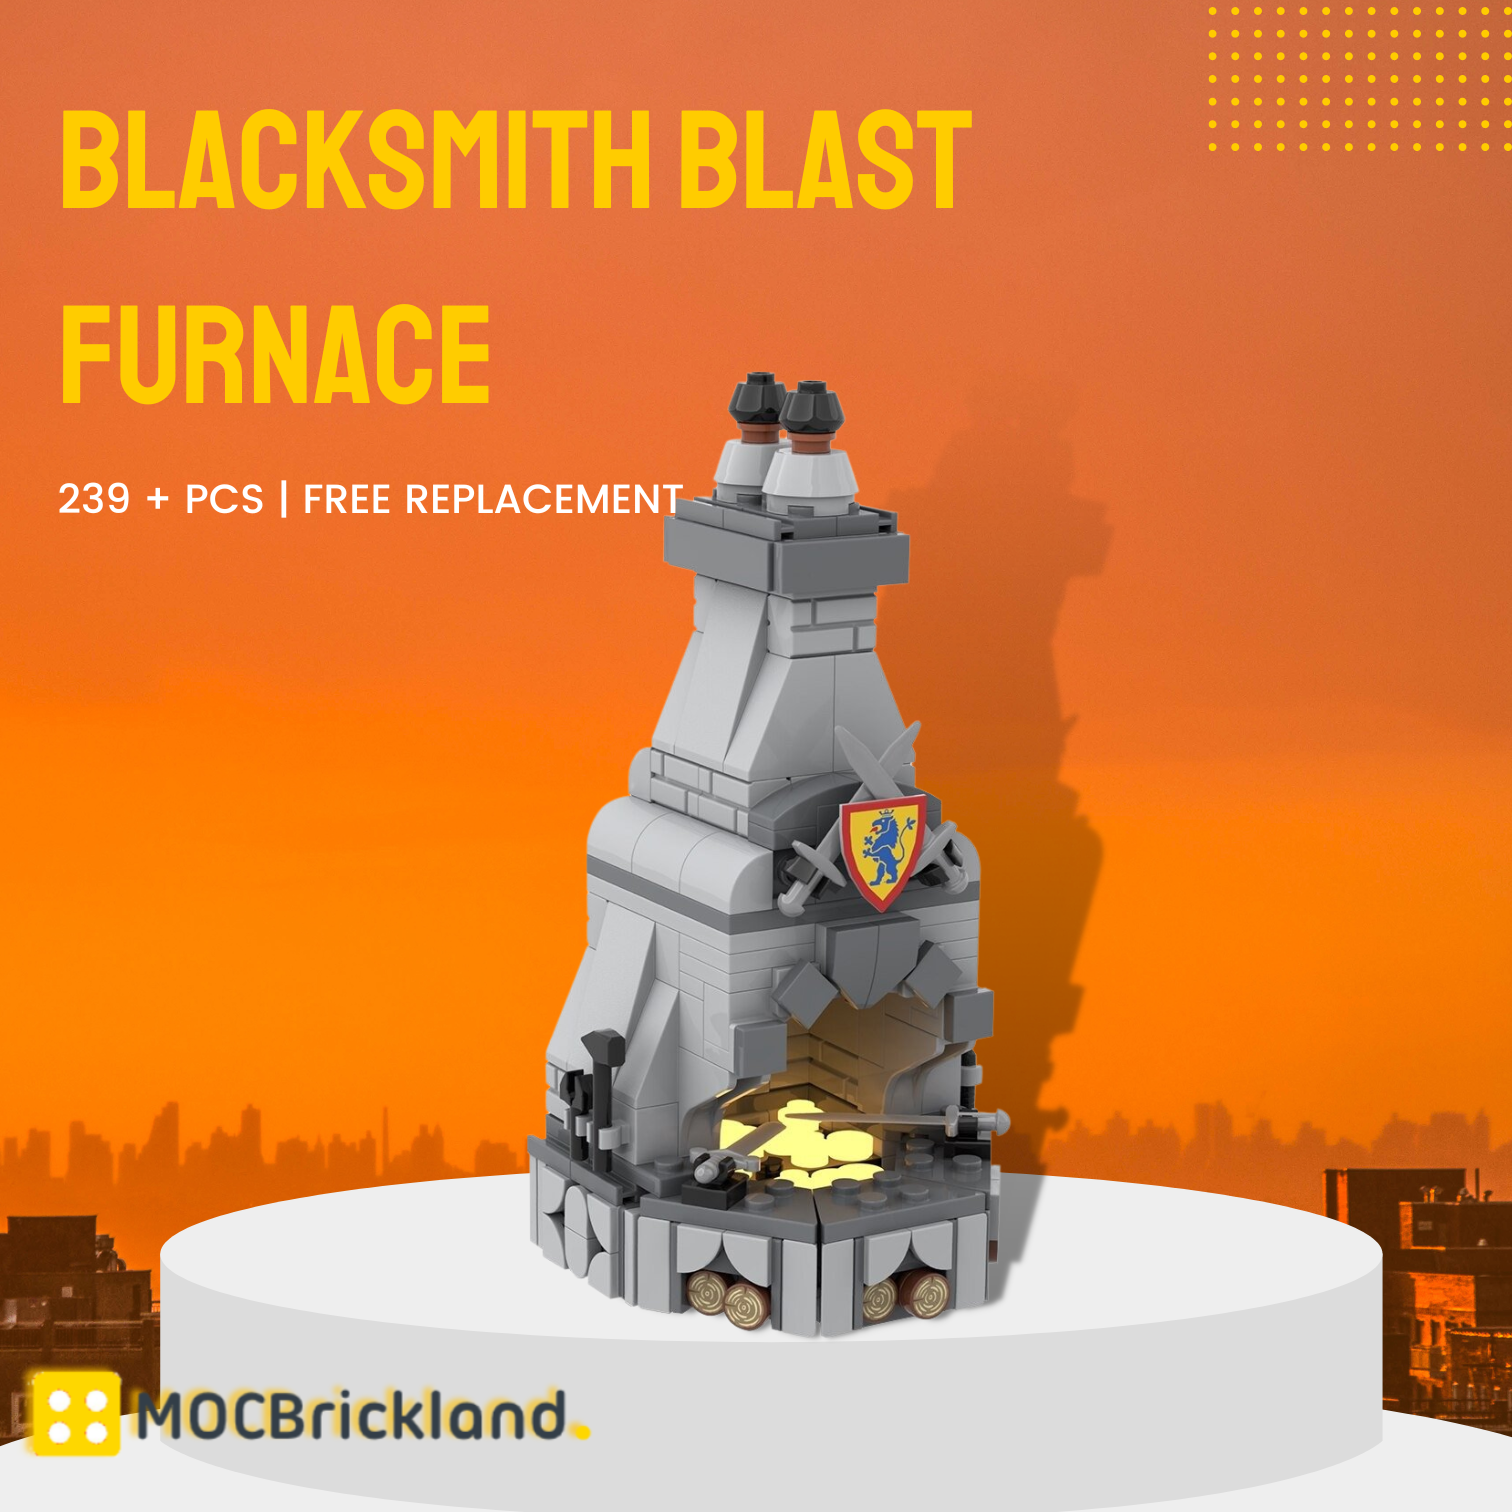 Blacksmith Blast Furnace Moc 115955 1